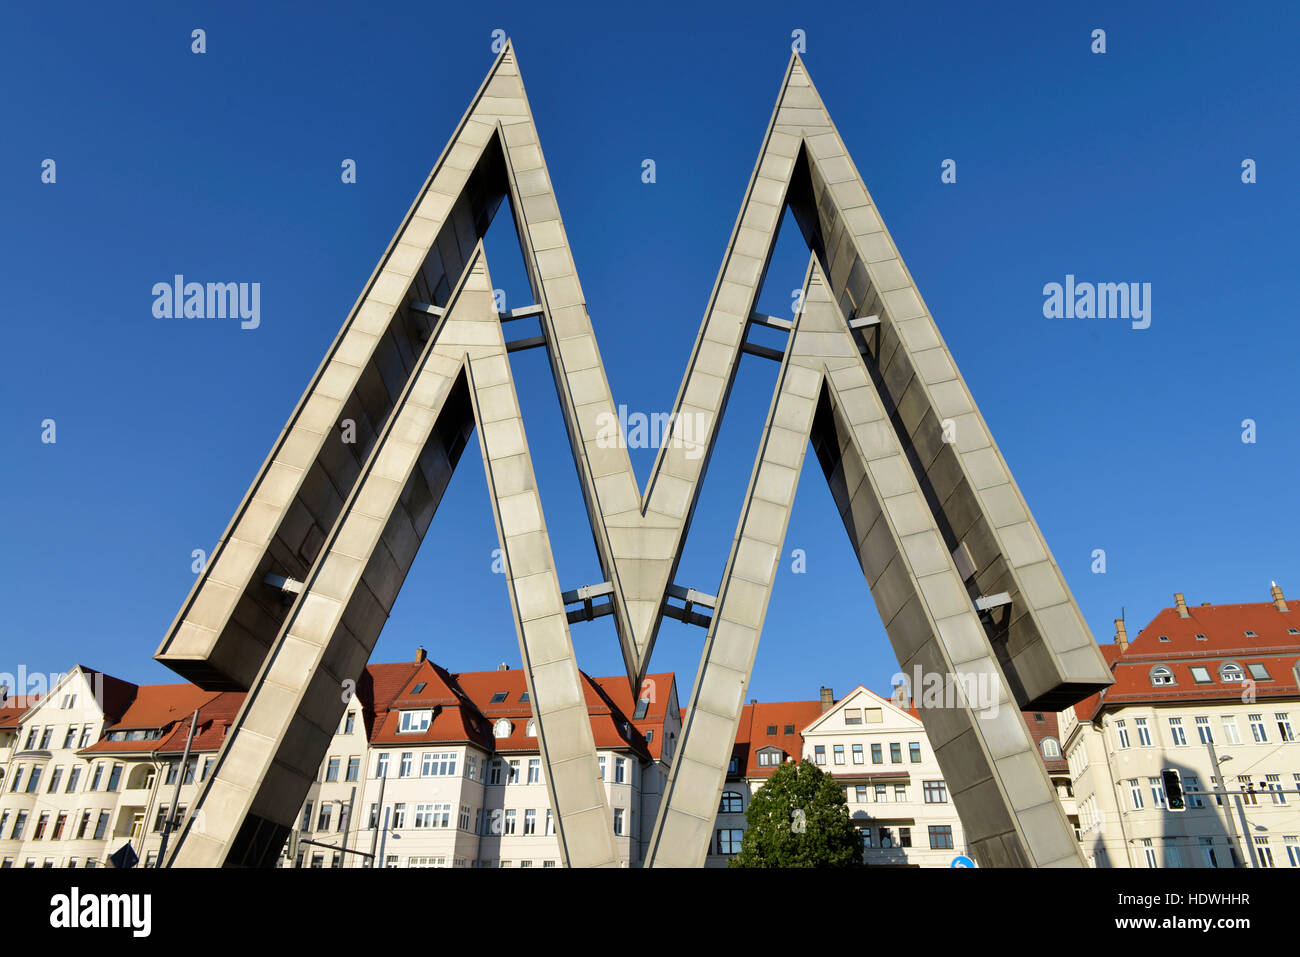 Messesymbol, Alte Messe, Prager Strasse, Leipzig, Saxe, Allemagne Banque D'Images